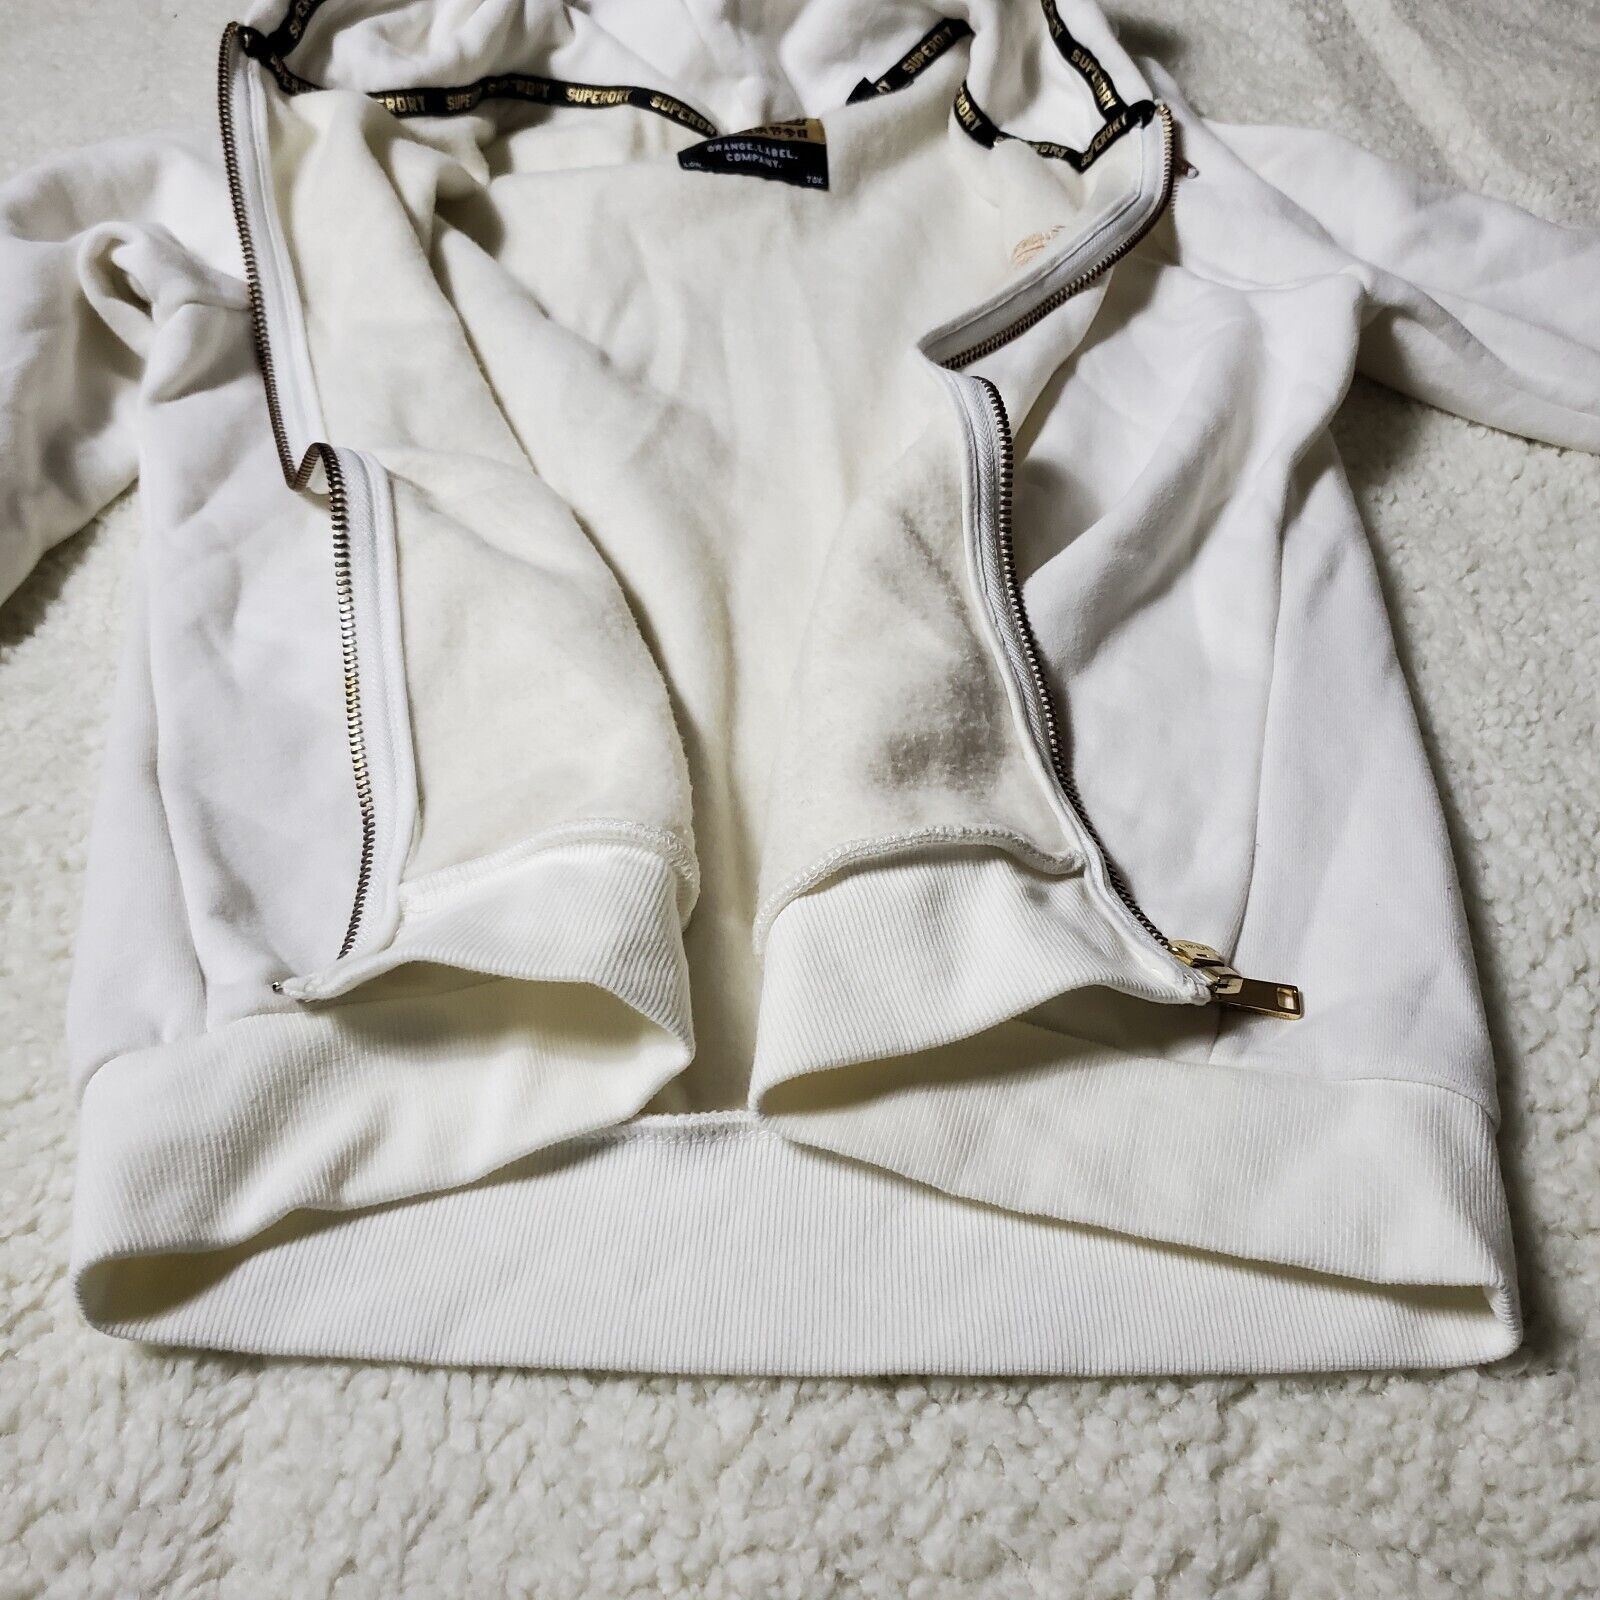 SuperDry Orange Label White Full Zip Sweater Jacket Women's Juniors Size 14